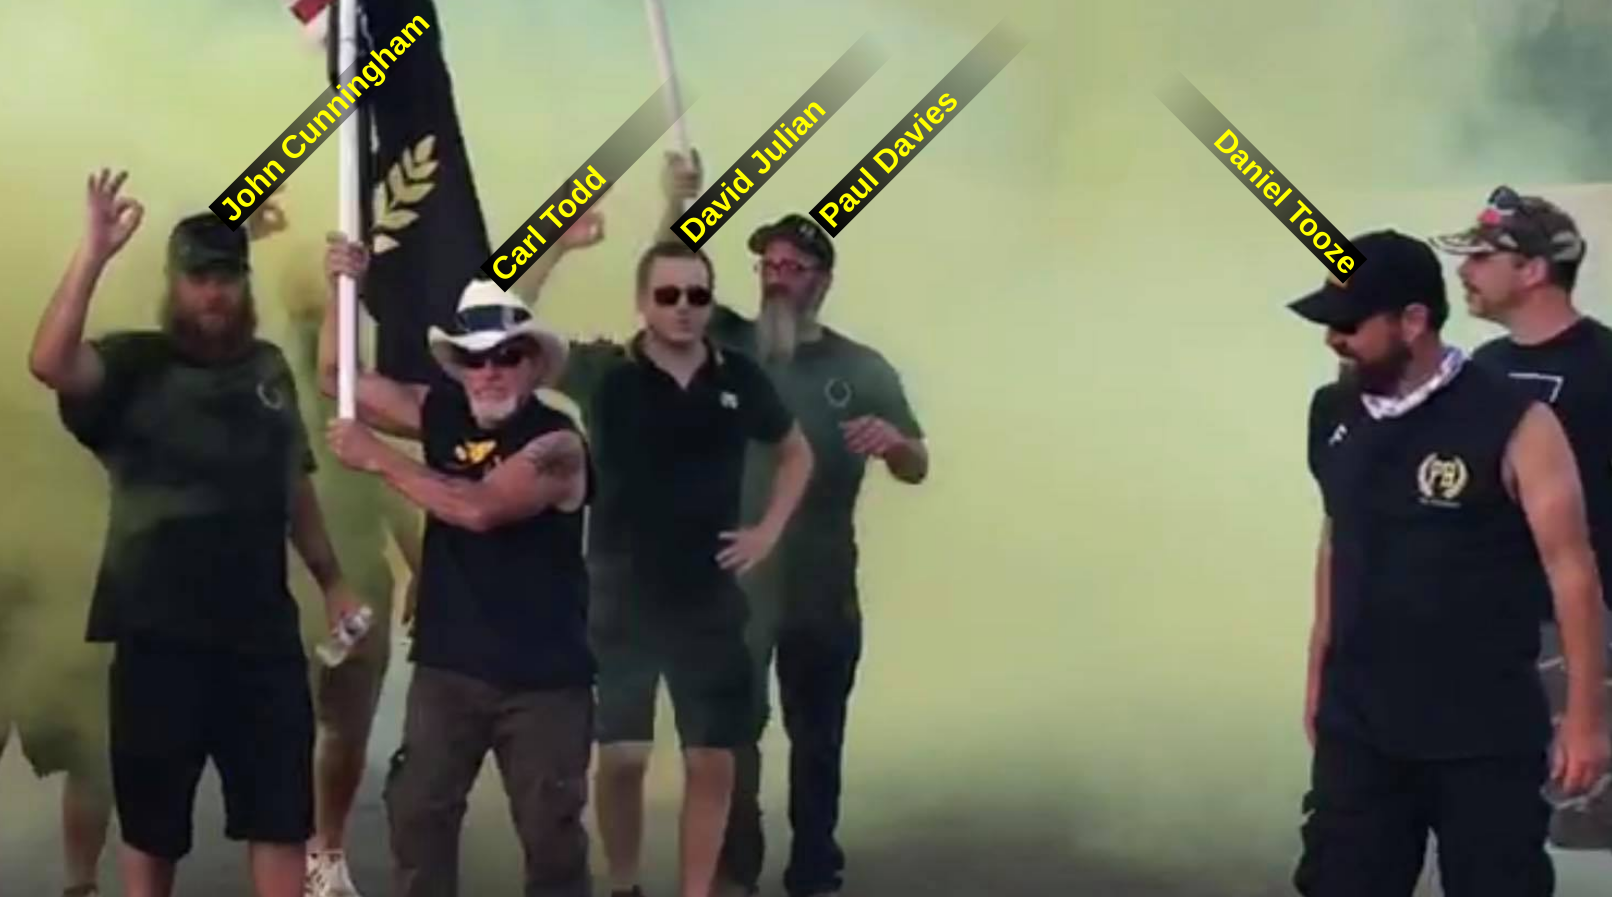 - IMAGE - david julian with fascists